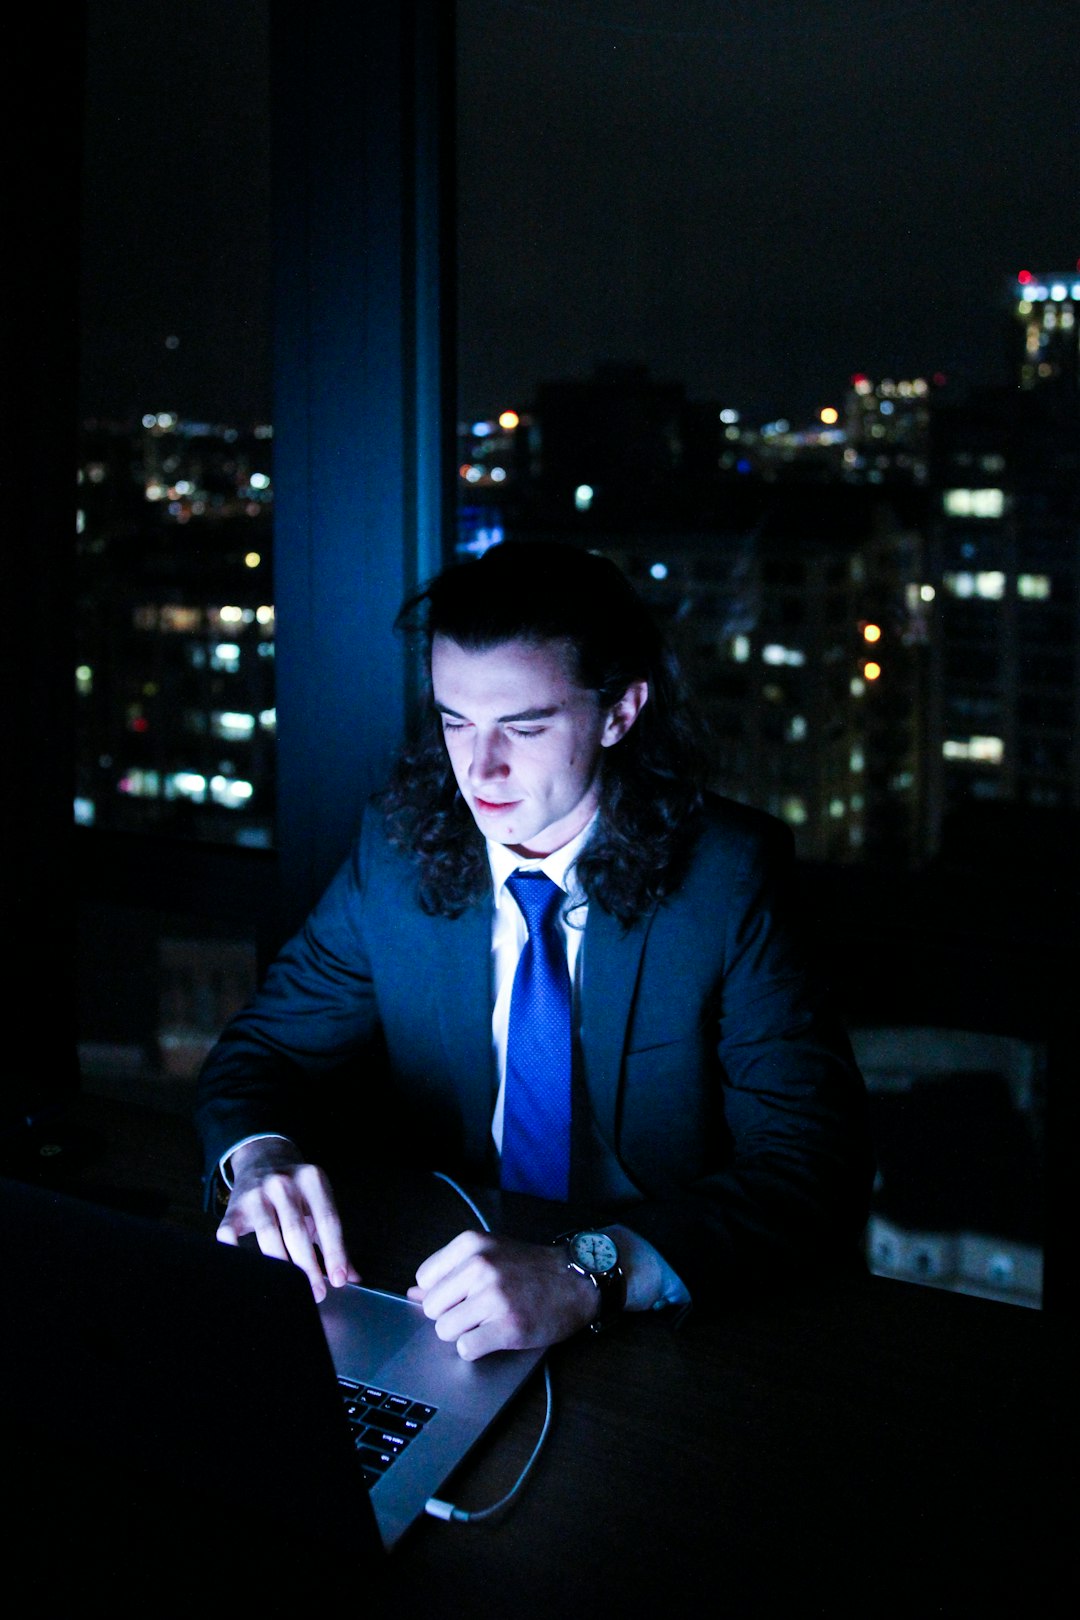 man in suit using laptop